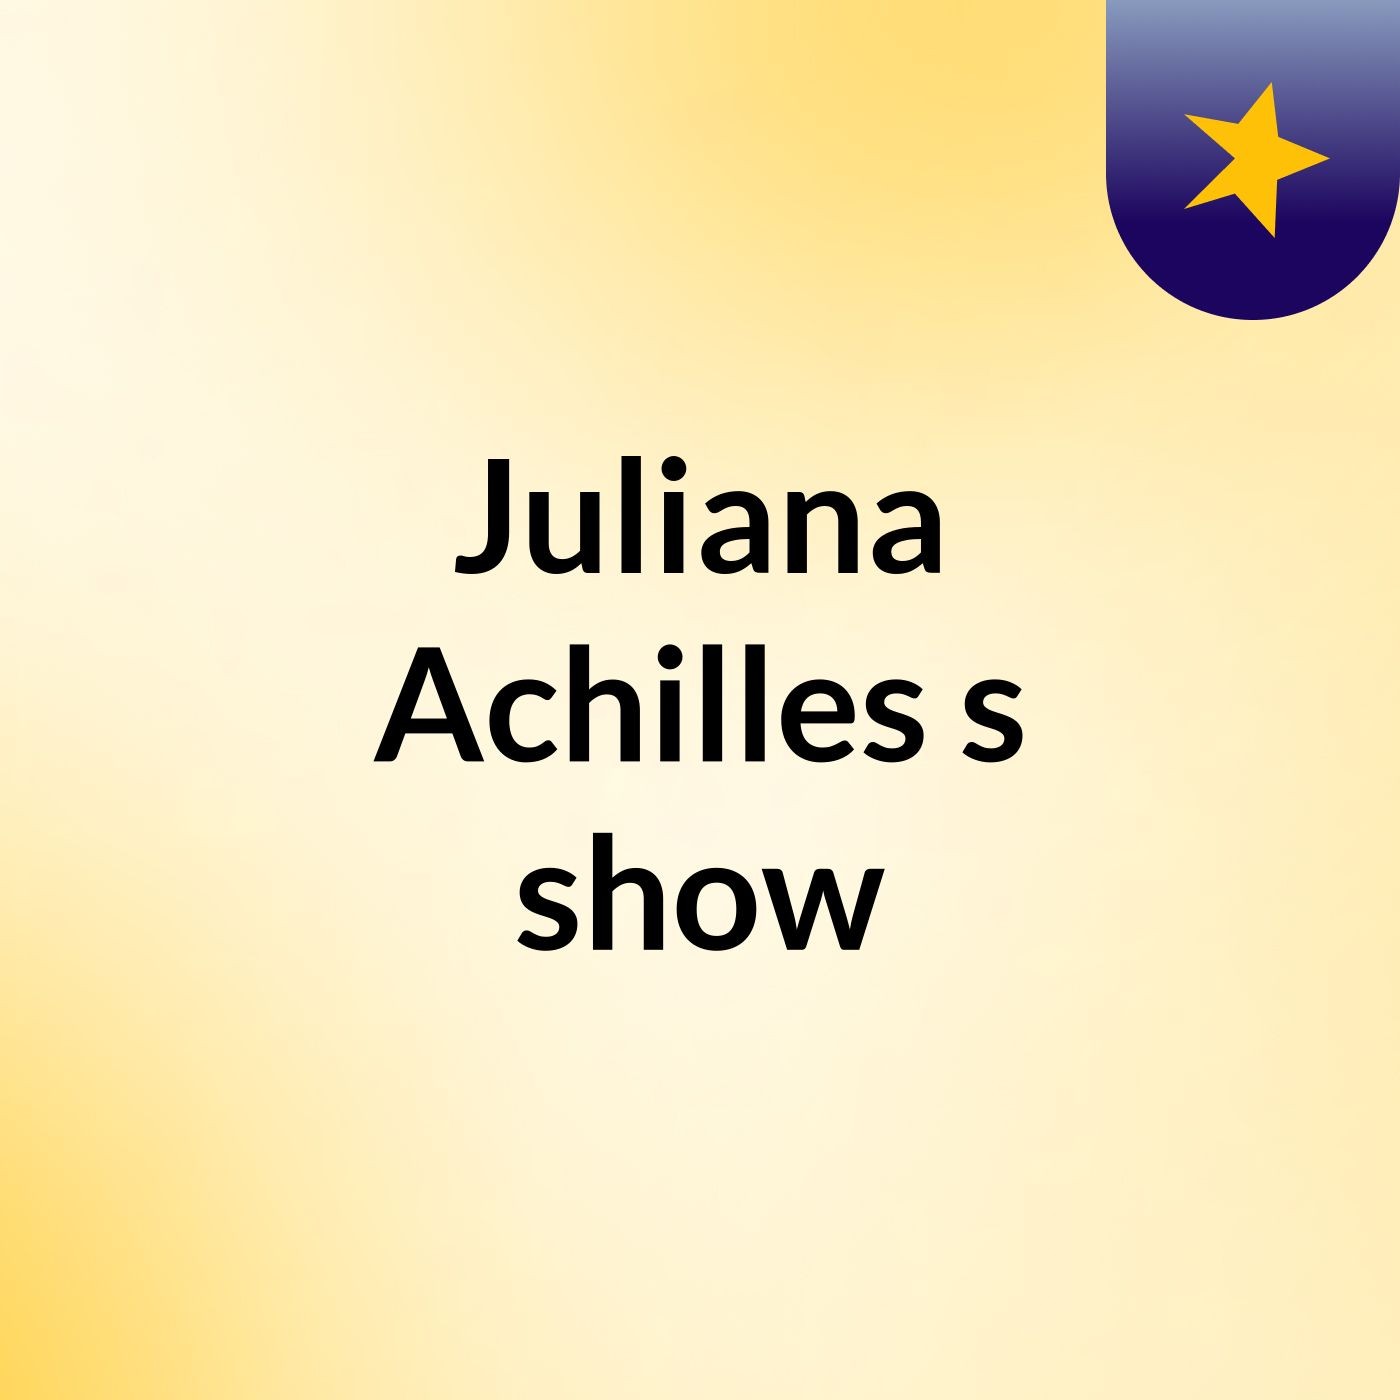 Juliana Achilles's show